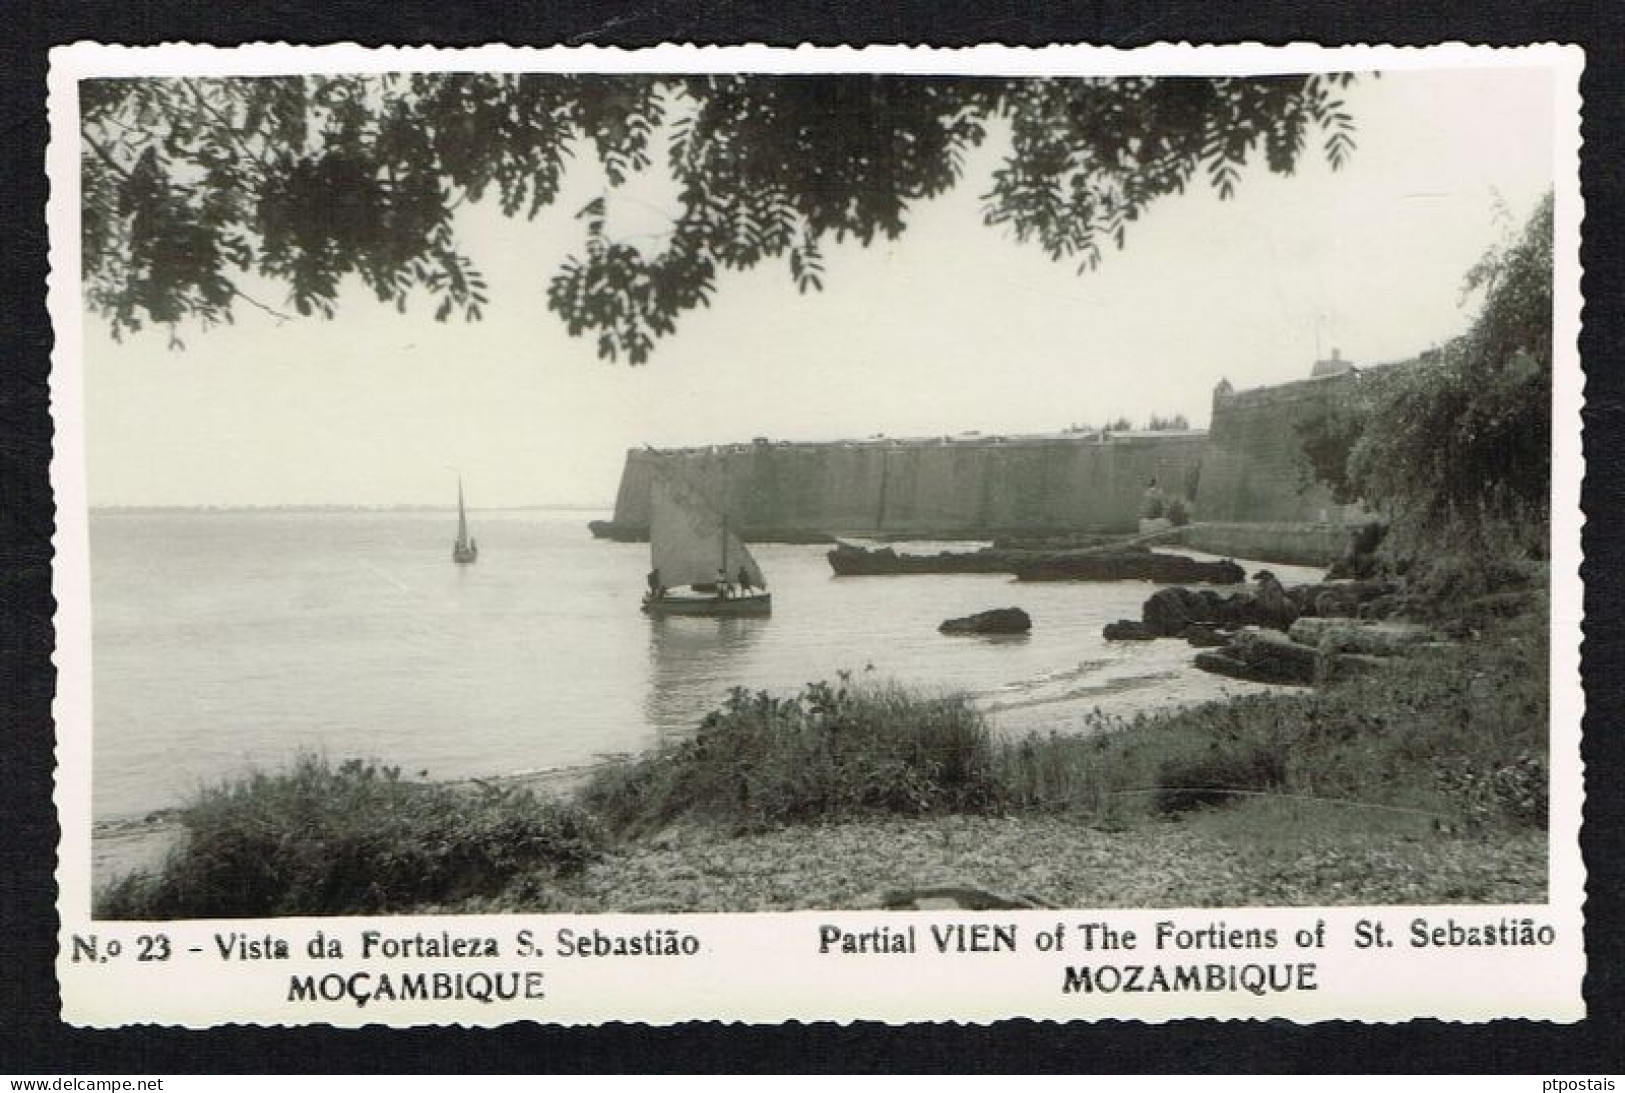 MOÇAMBIQUE MOZAMBIQUE (Africa) - Partial View Of The Fortien Of St. Sebastião RARE PHOTO-POSTCARD - Mozambique